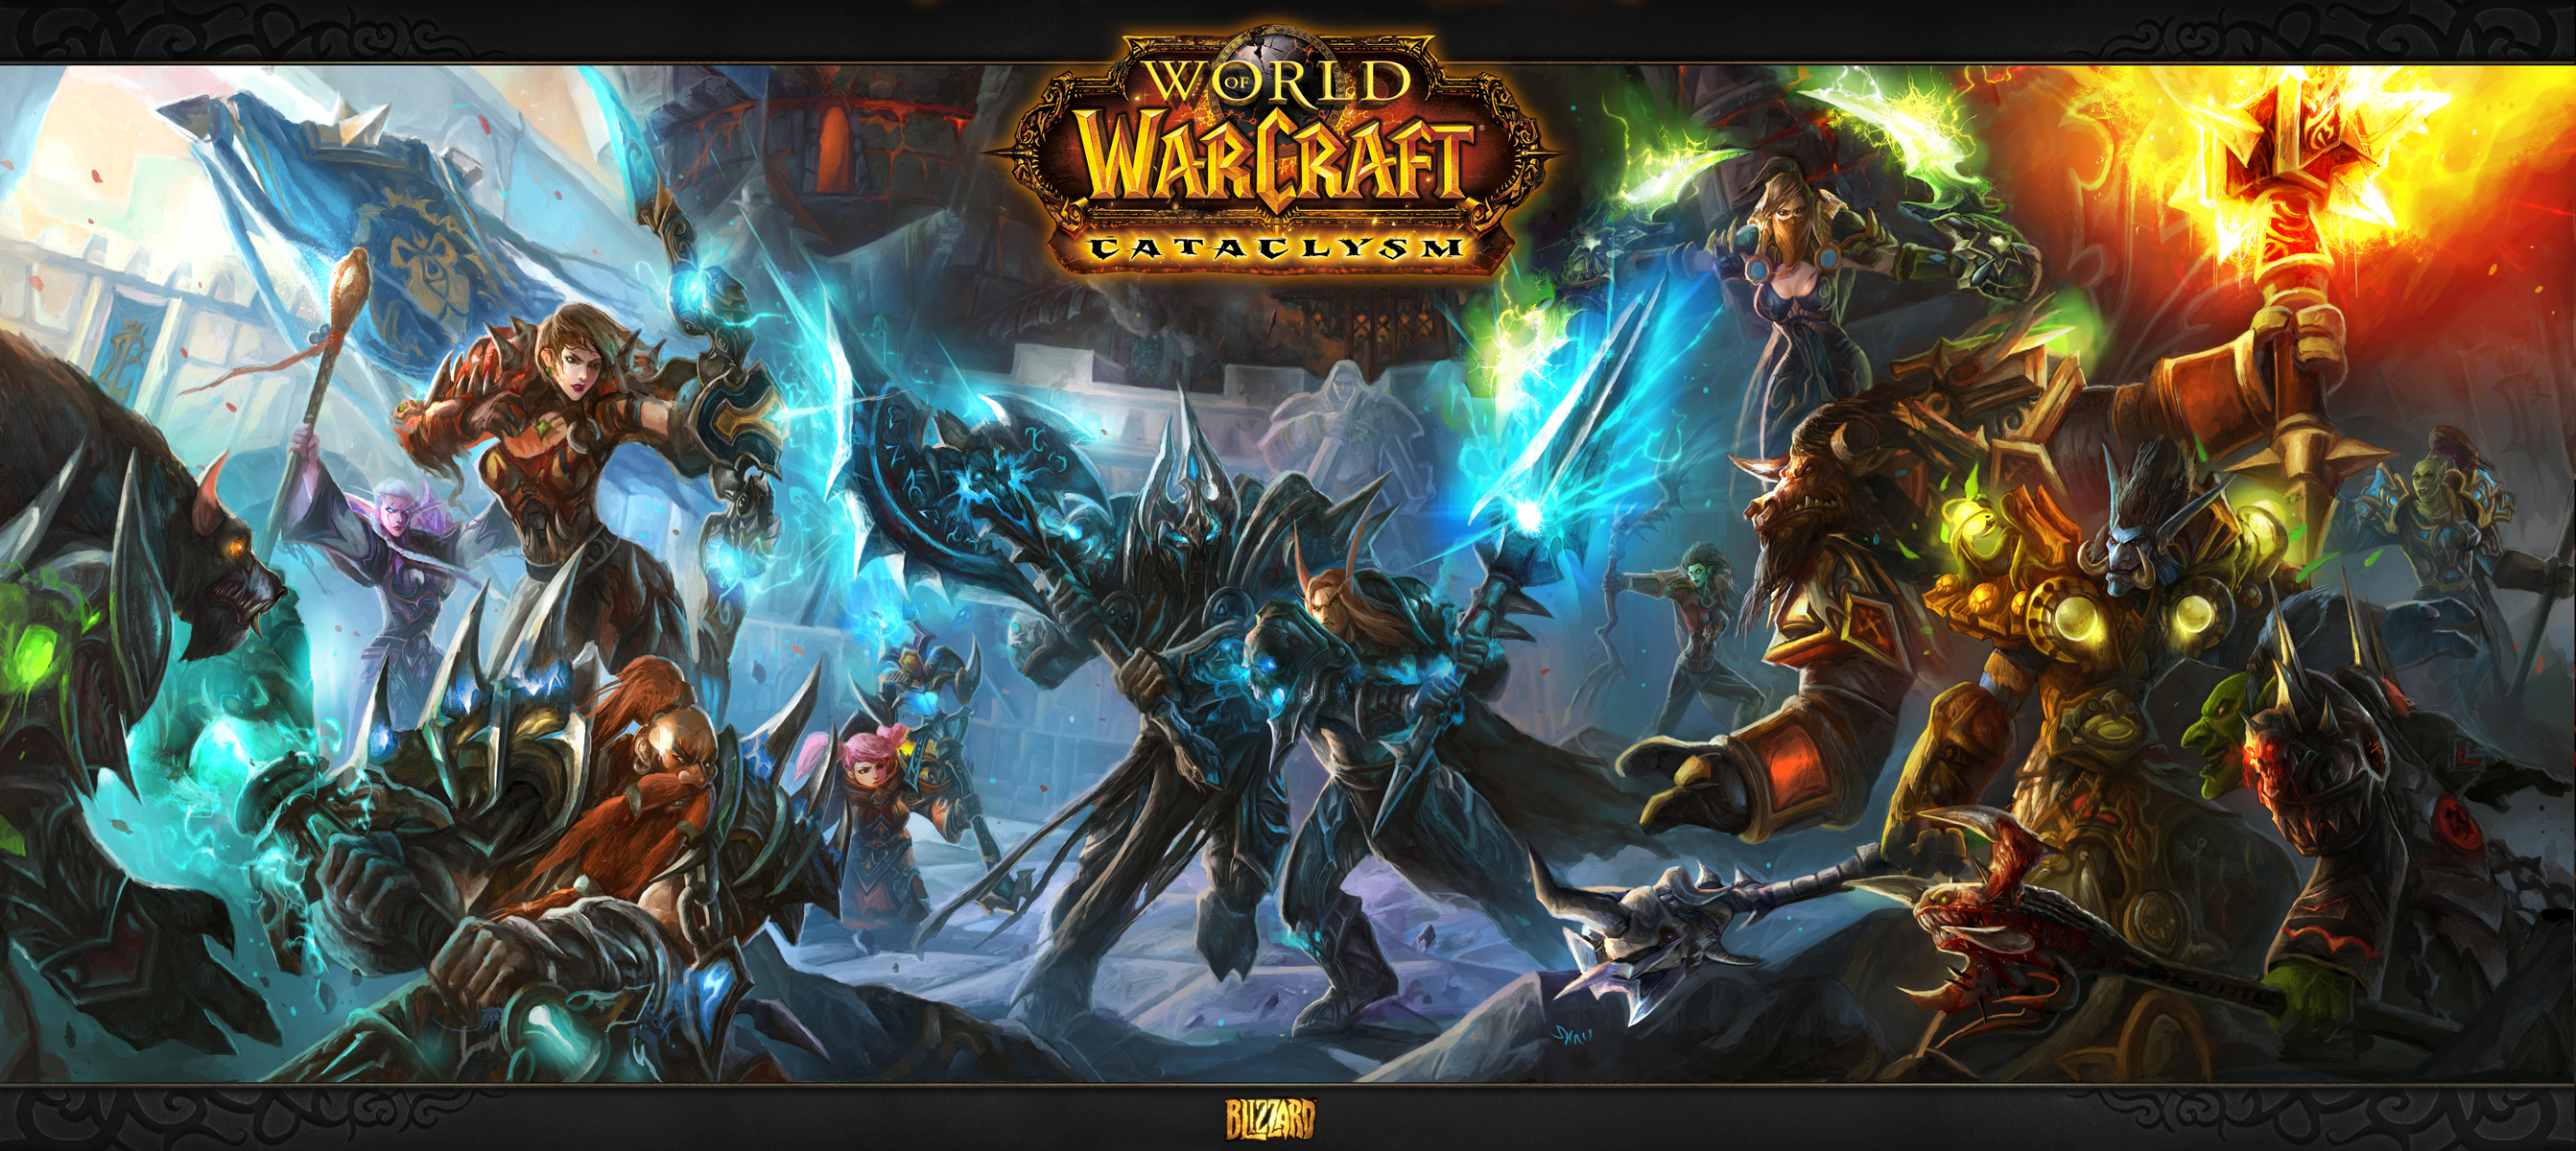 Free Download De Pantalla De World Of Warcraft Wallpapers De World Of Warcraft [2685x1200] For